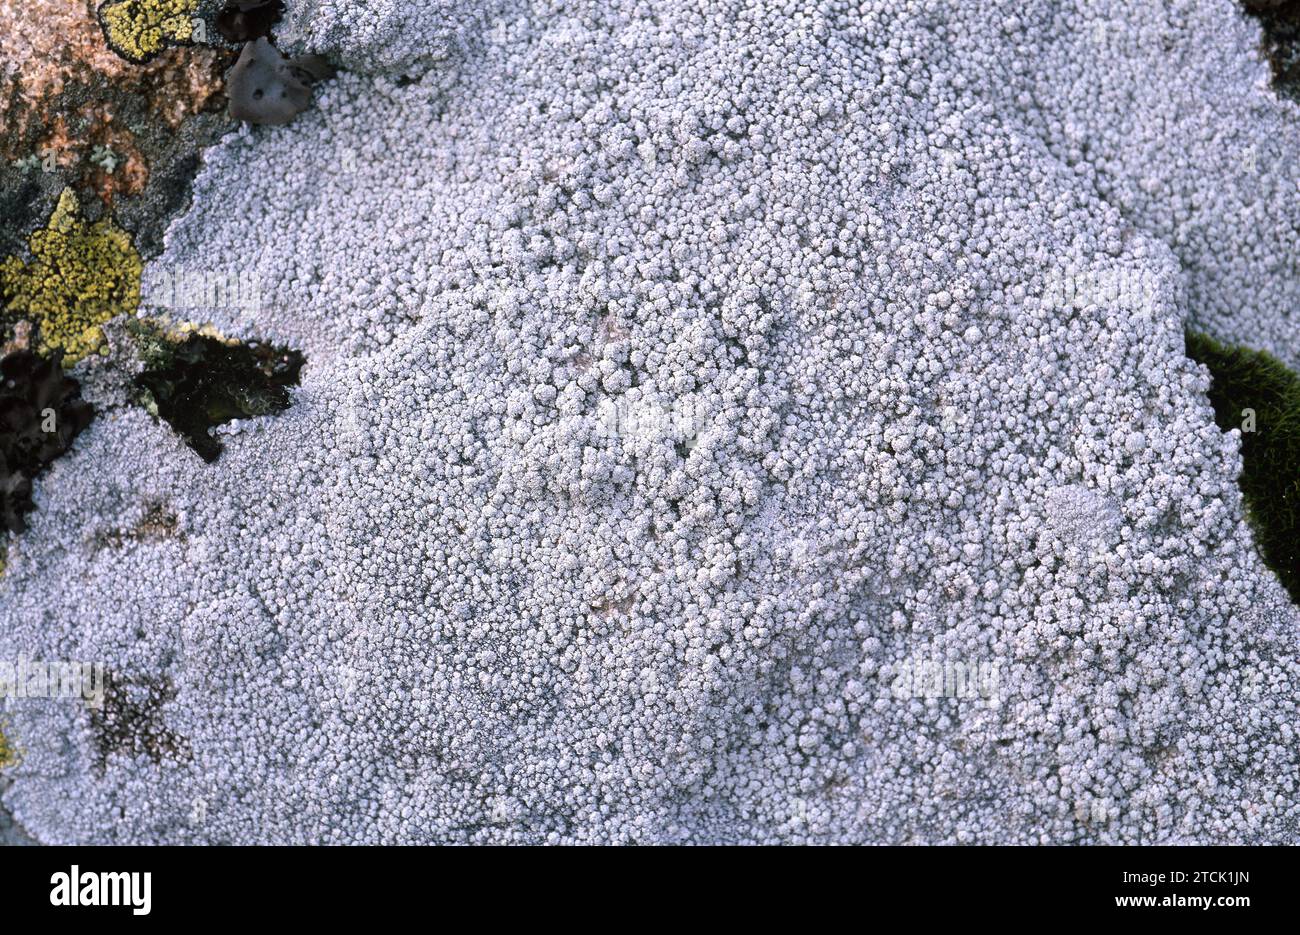 Pertusaria amara is a crustose lichen that grows on bark tree or siliceous rock. Stock Photo